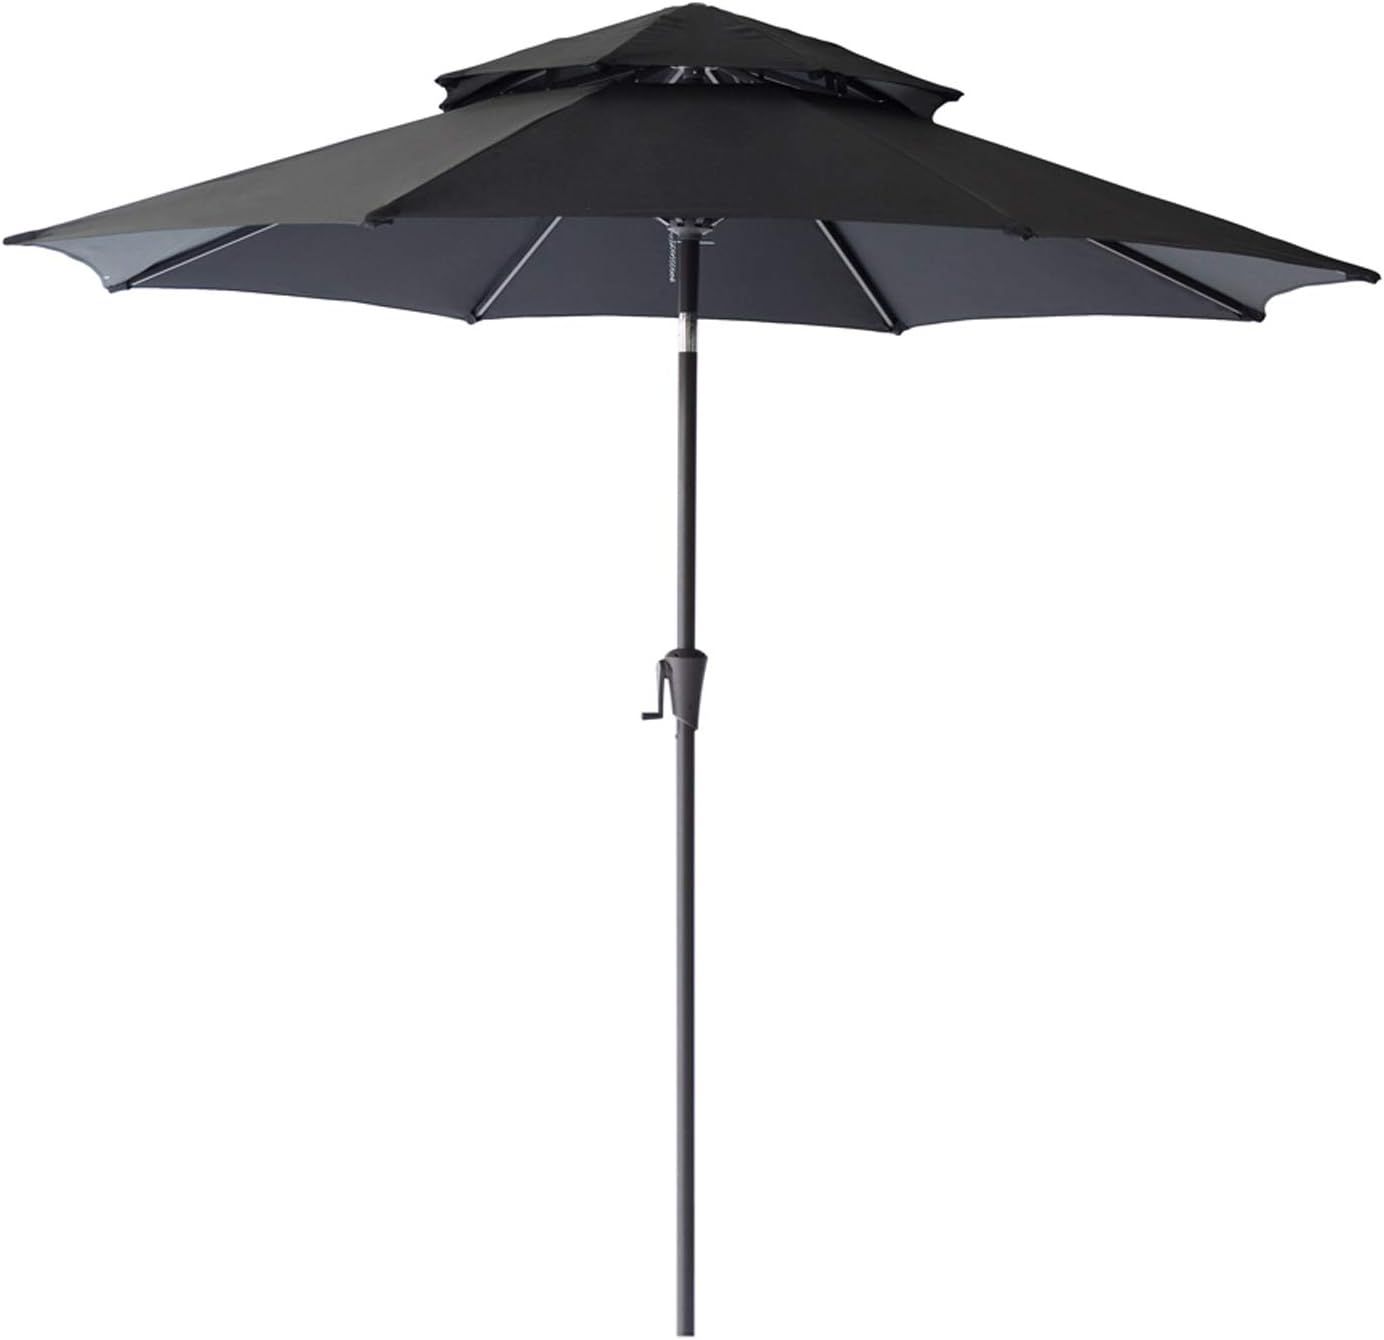 C-Hopetree 9 ft Double Top Outdoor Patio Market Table Umbrella with Tilt, Black | Amazon (US)